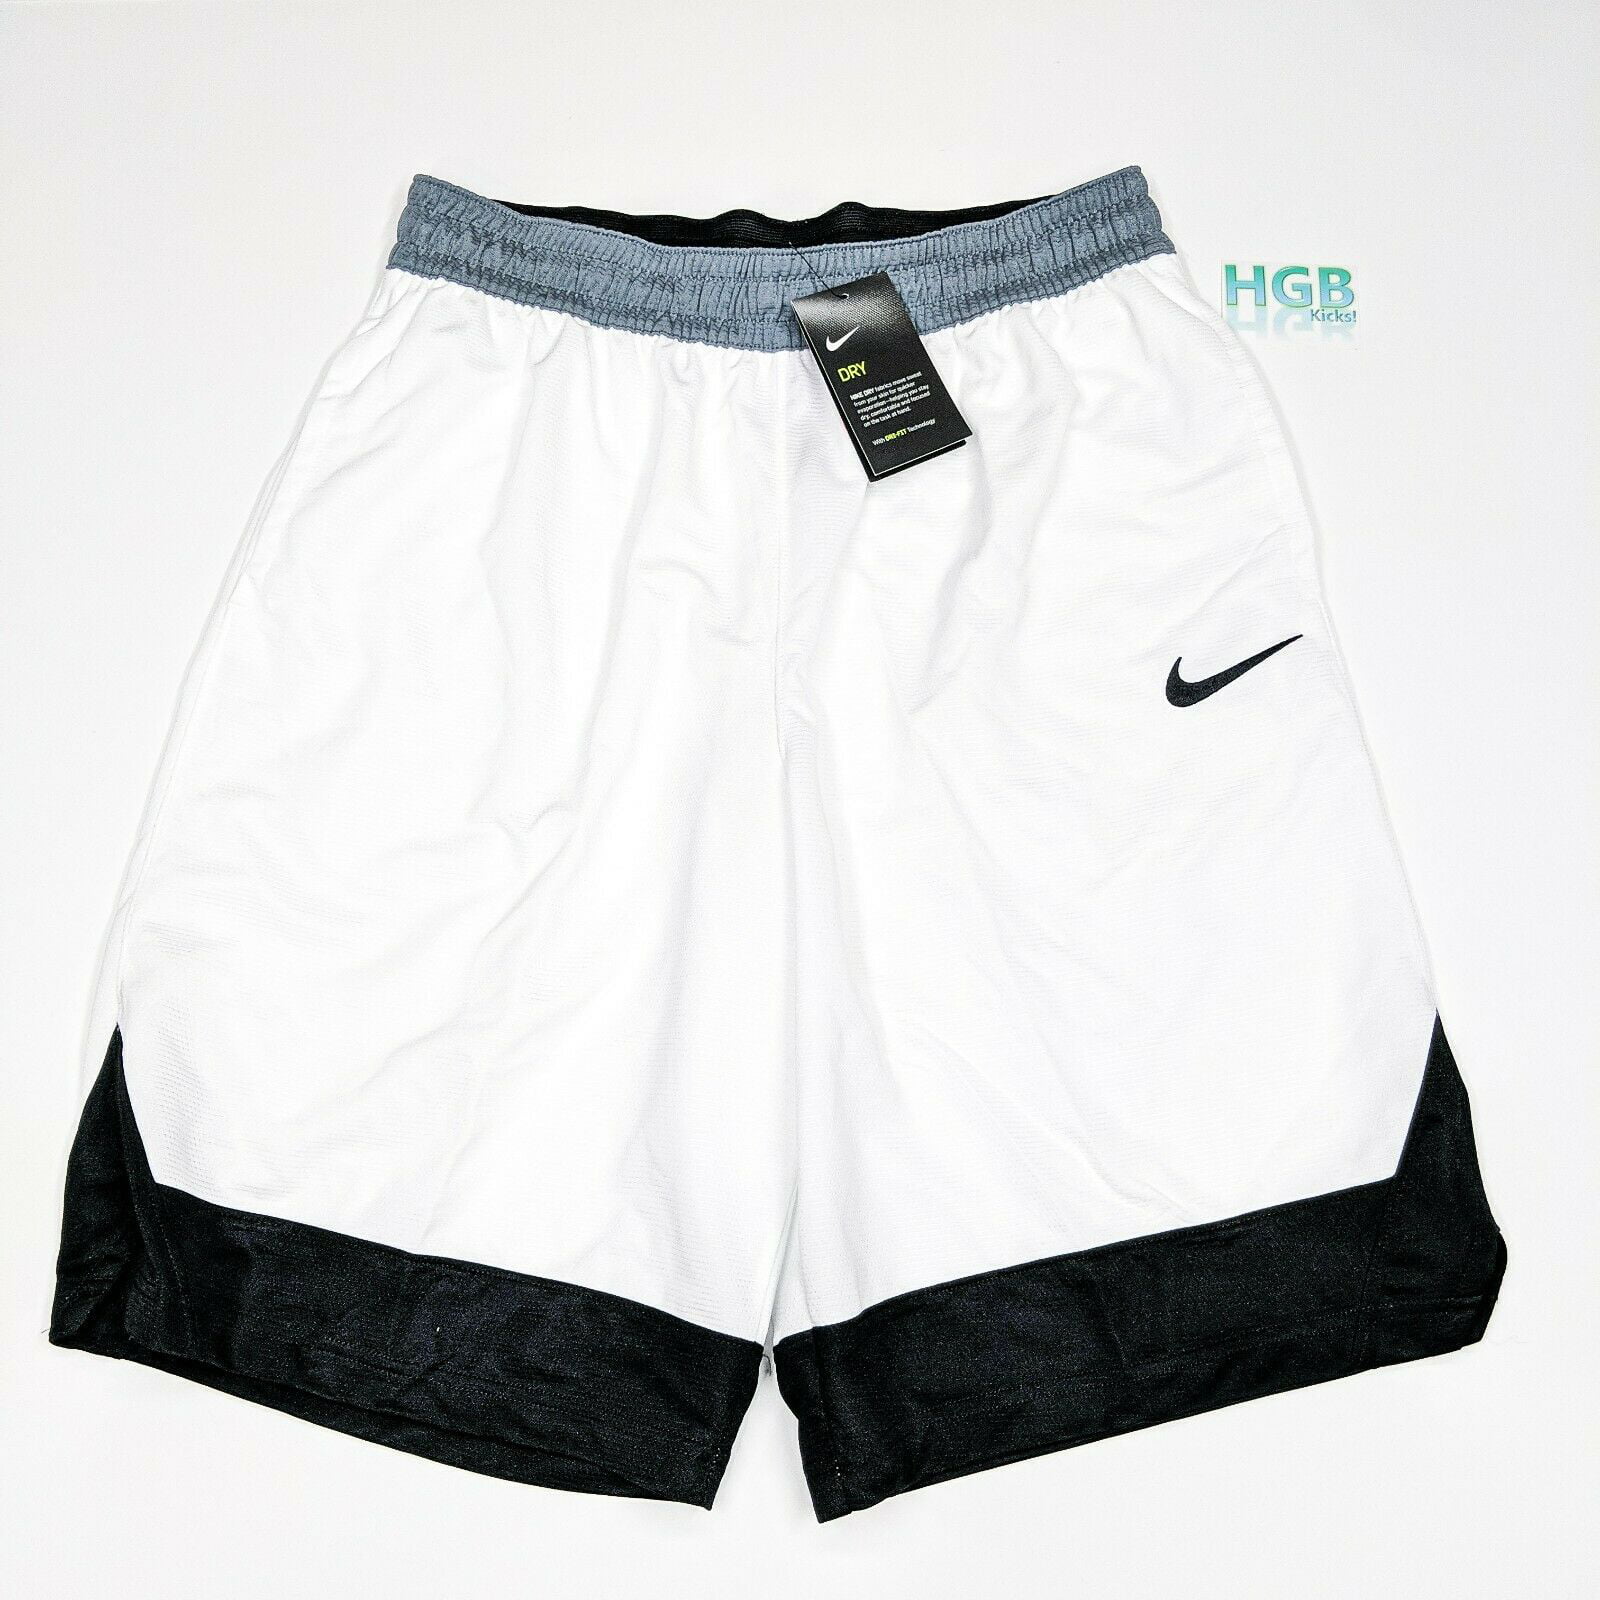 Nike Dry Shorts Men's Basketball White Grey Black AJ3914-101 - Walmart.com